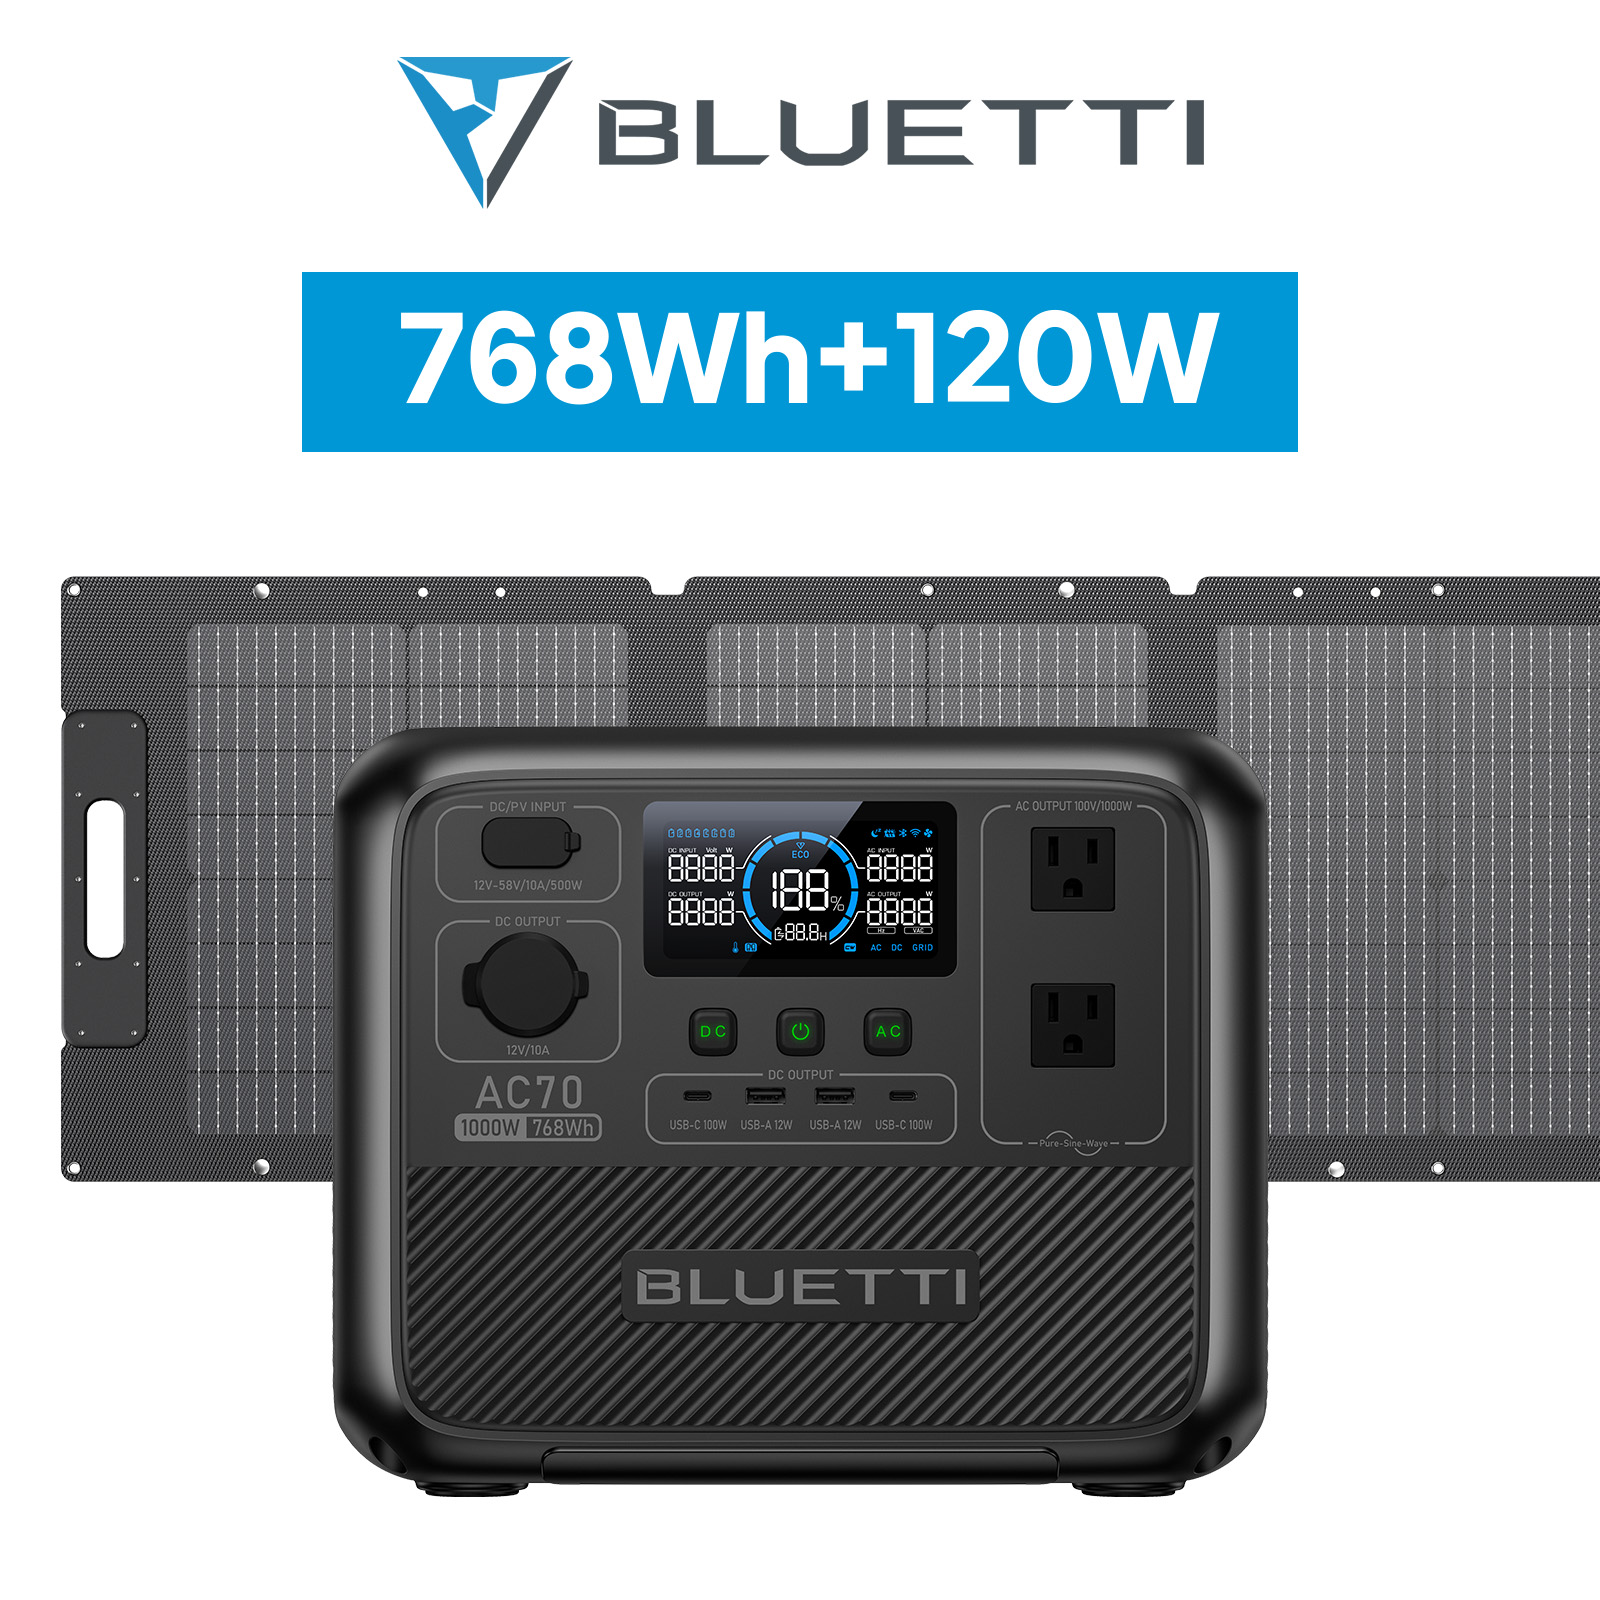 BLUETTI ポータブル電源 ソーラーパネル セット AC70+120W 768Wh/1000W 大容量 家庭用 蓄電池 5年保証 バックアップ電源 (サージ2000W) UPS機能